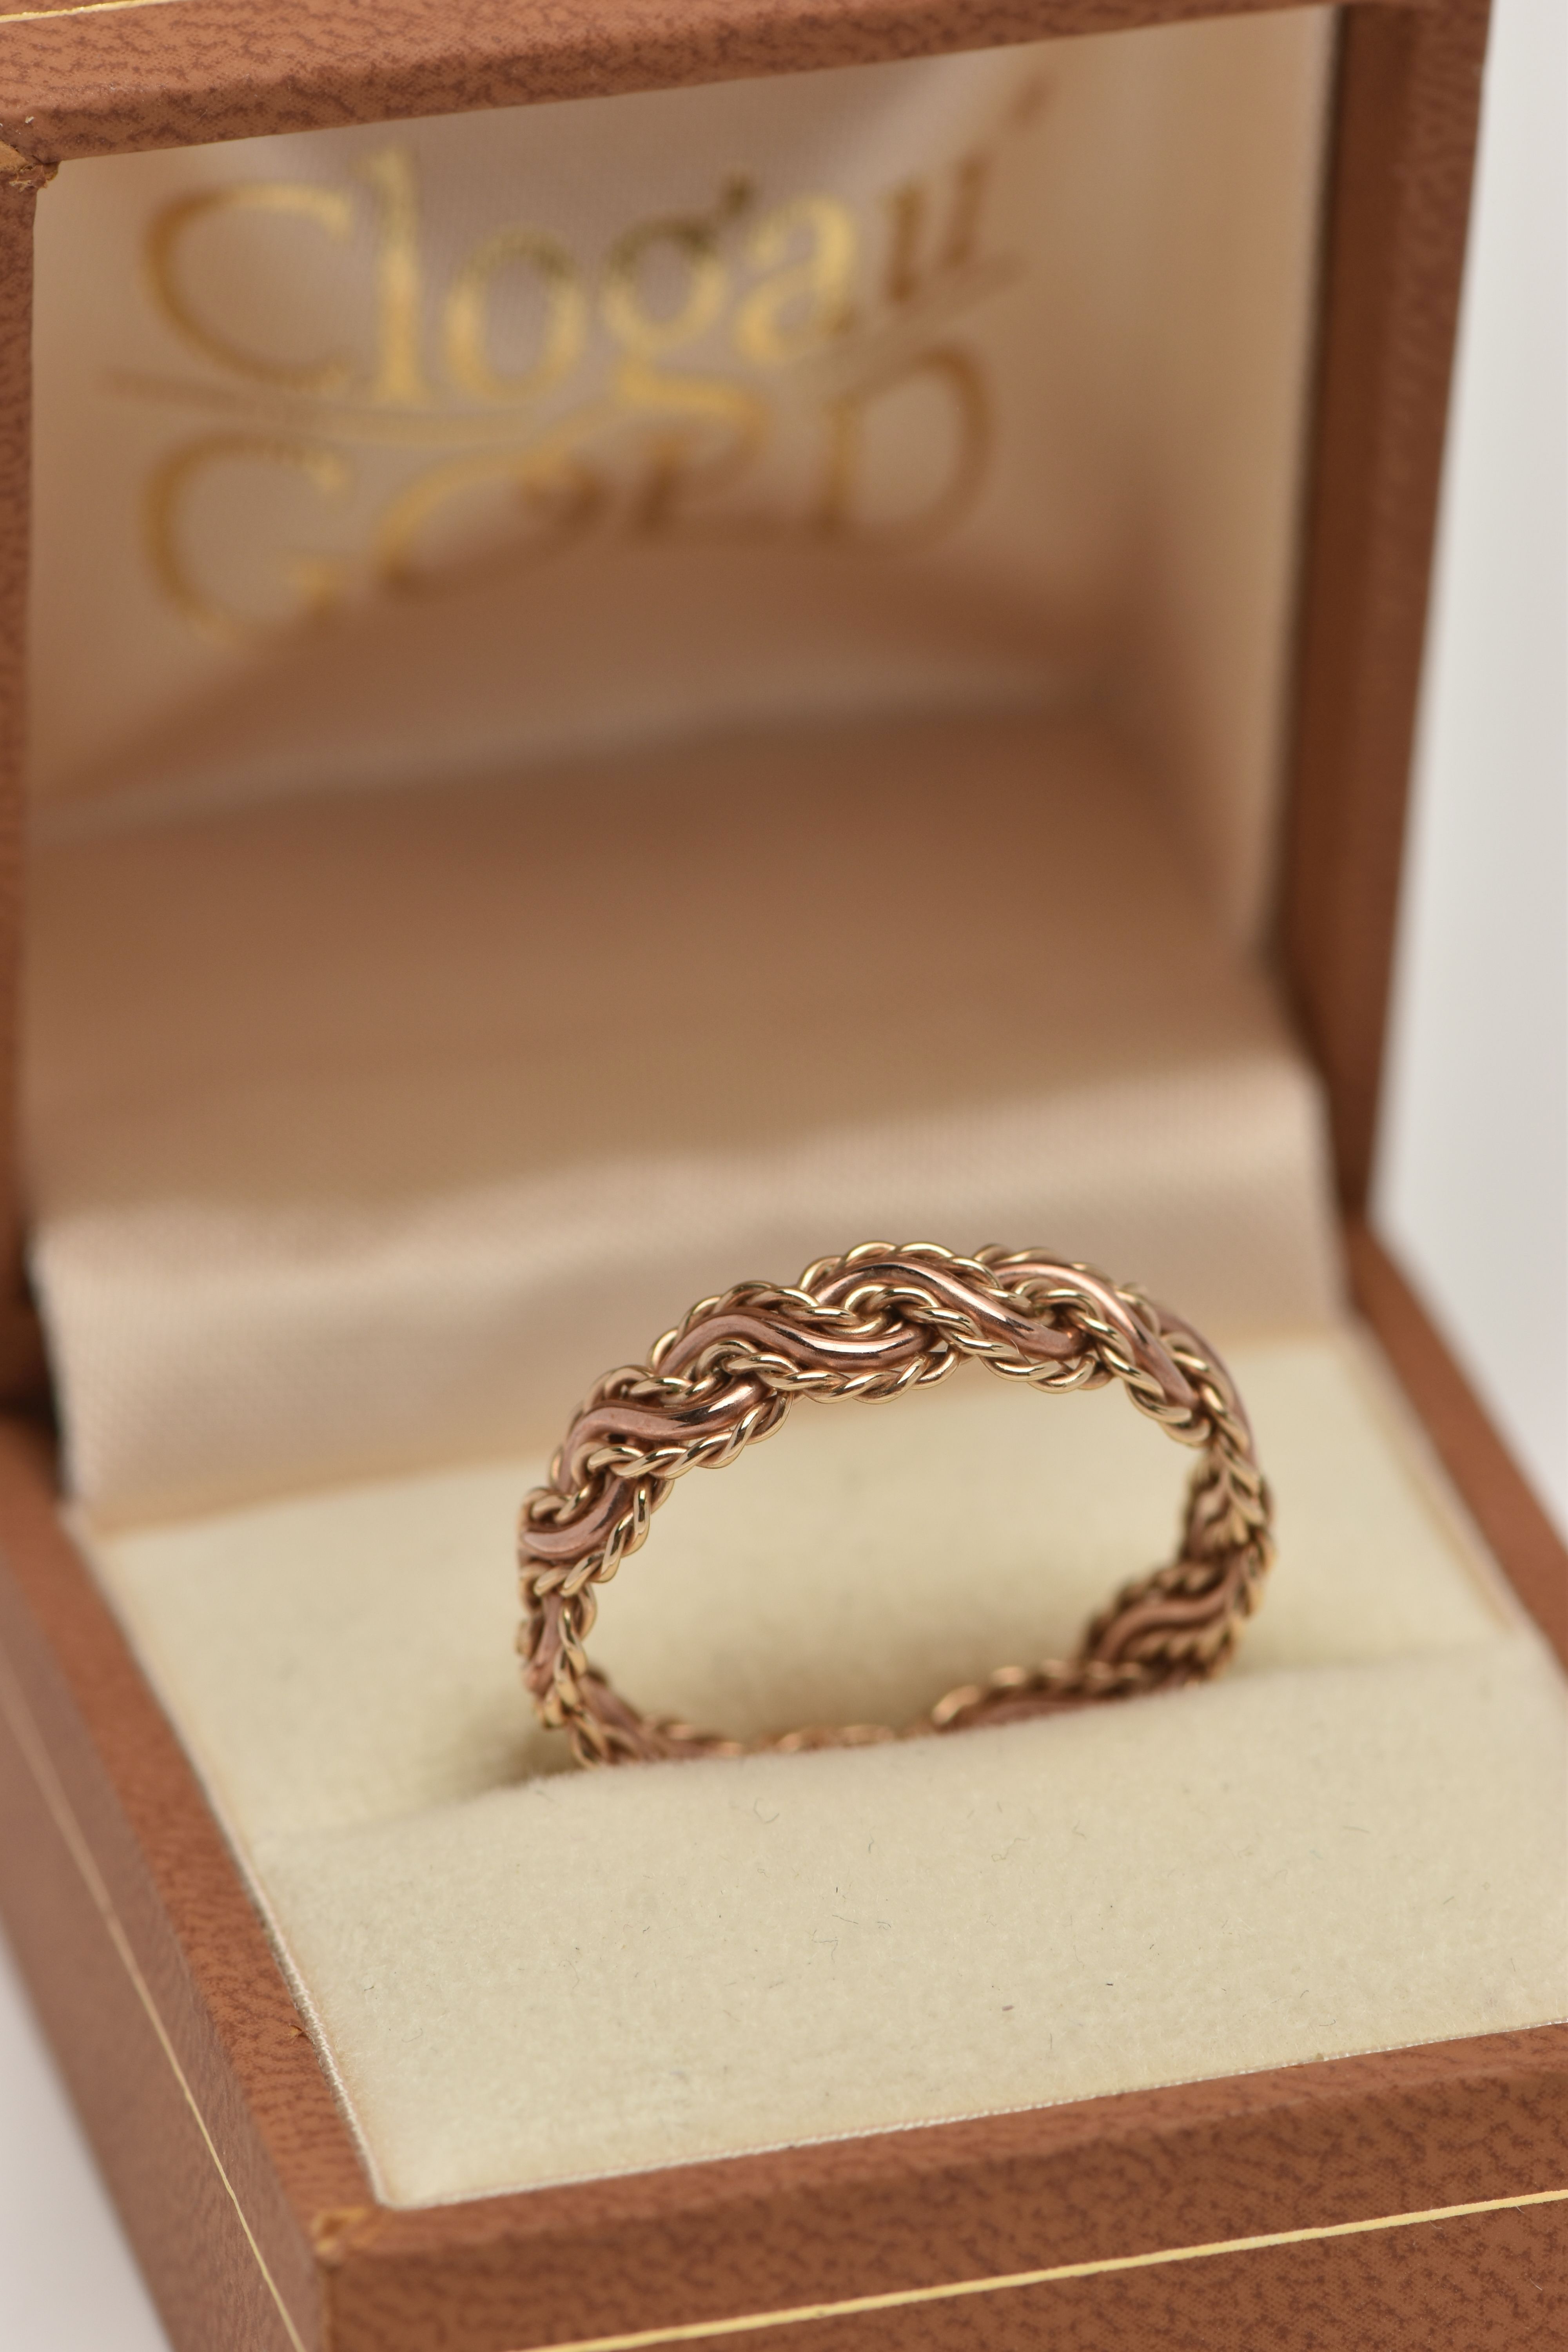 A 9CT ROSE GOLD 'CLOGAU' RING, textured band design, hallmarked 9ct Edinburgh, ring size Q 1/2 - Image 2 of 3